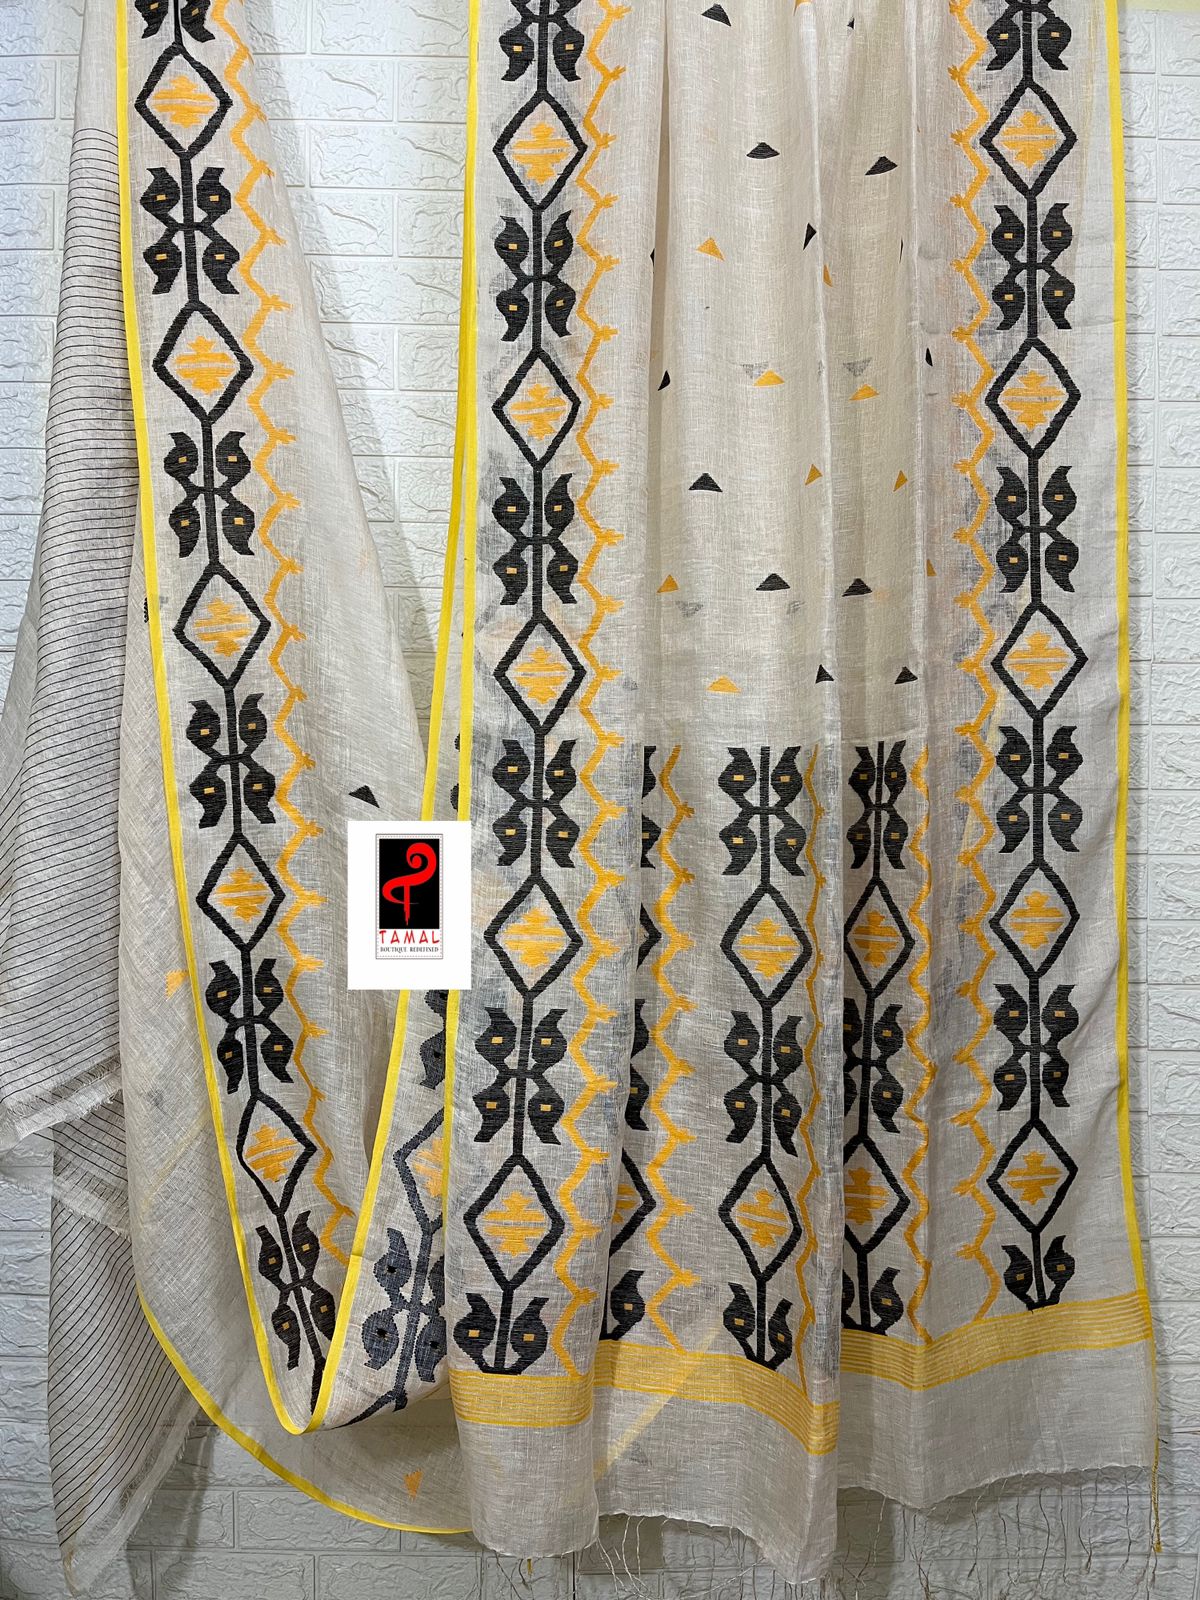 Offwhite with yellow & black traditional handwoven linen jamdani  saree